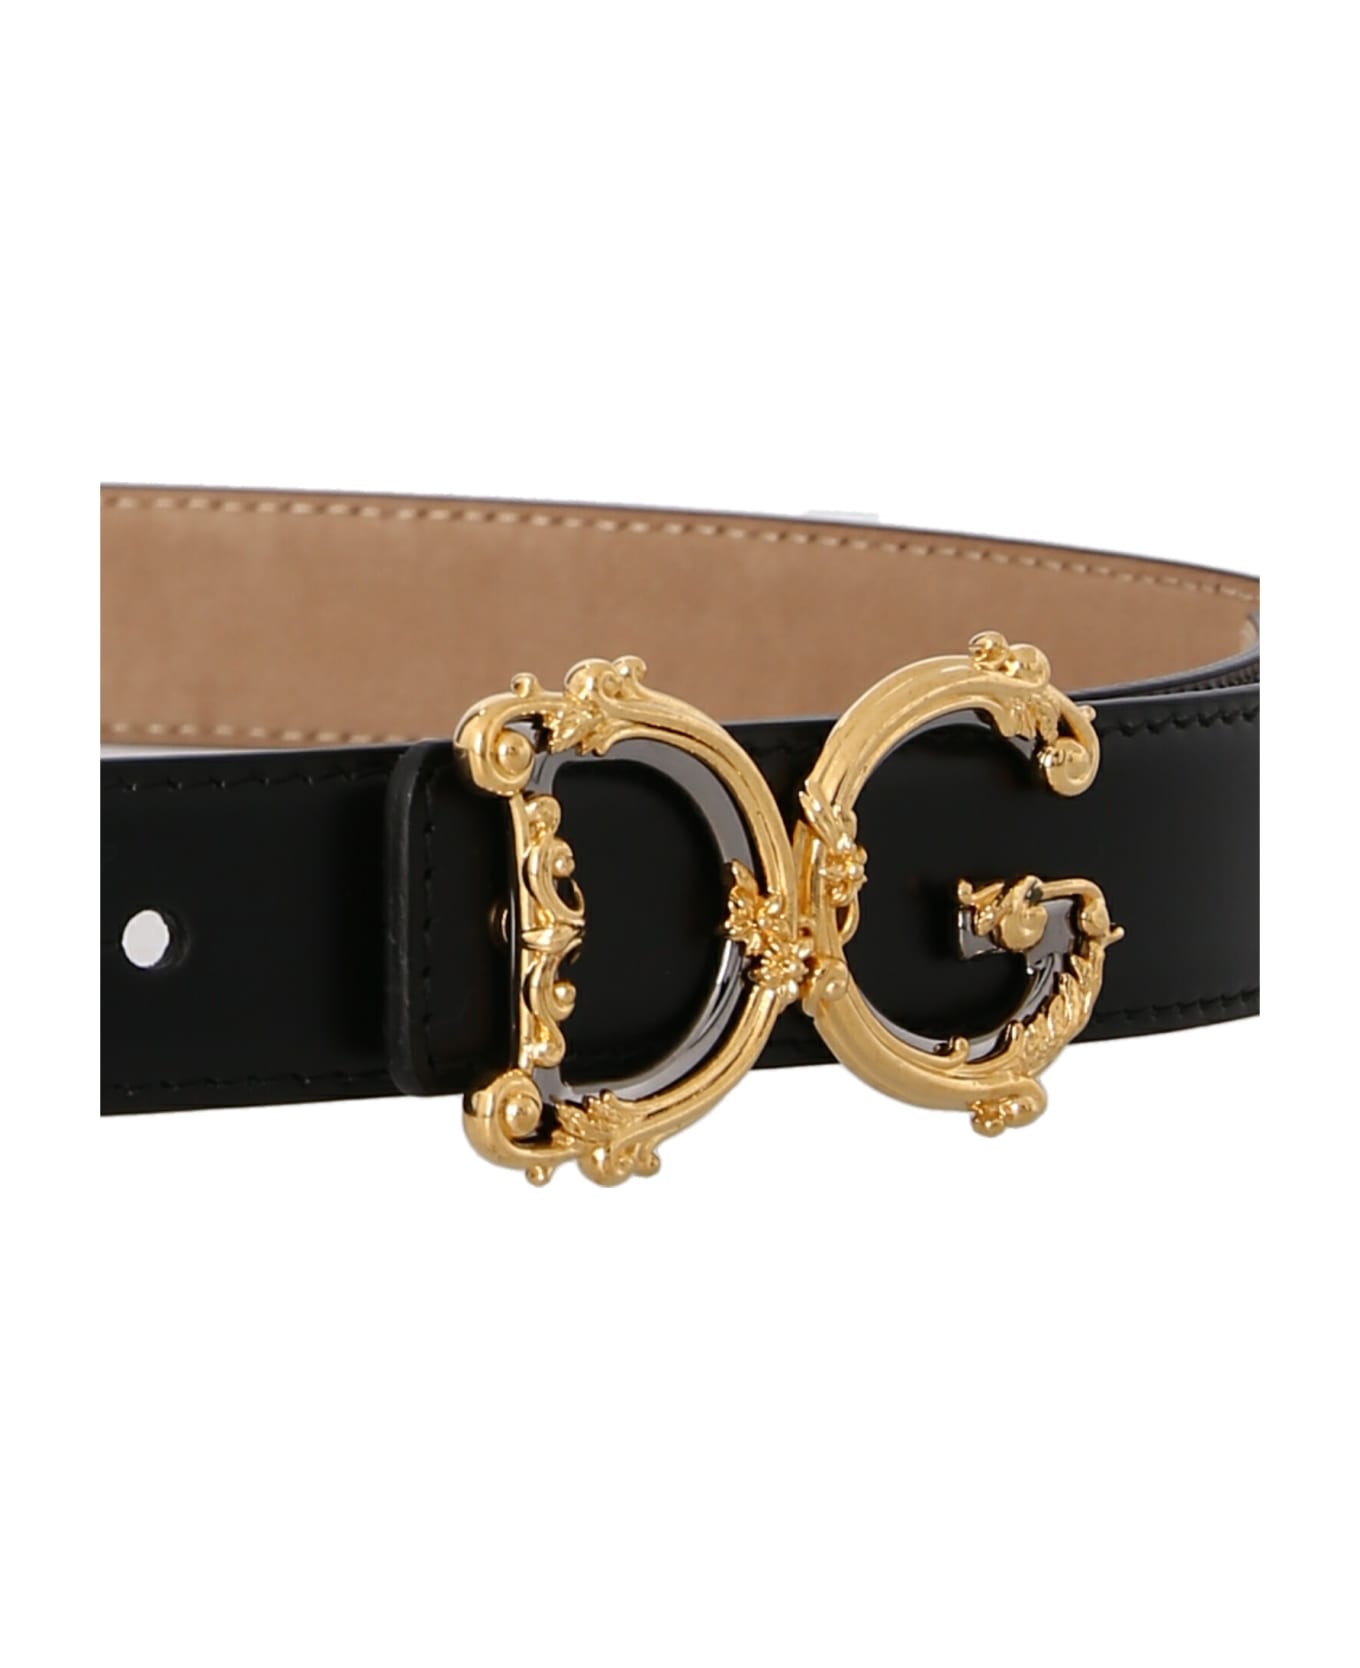 Dolce & Gabbana 'dg Girl' Belt - Black   ベルト